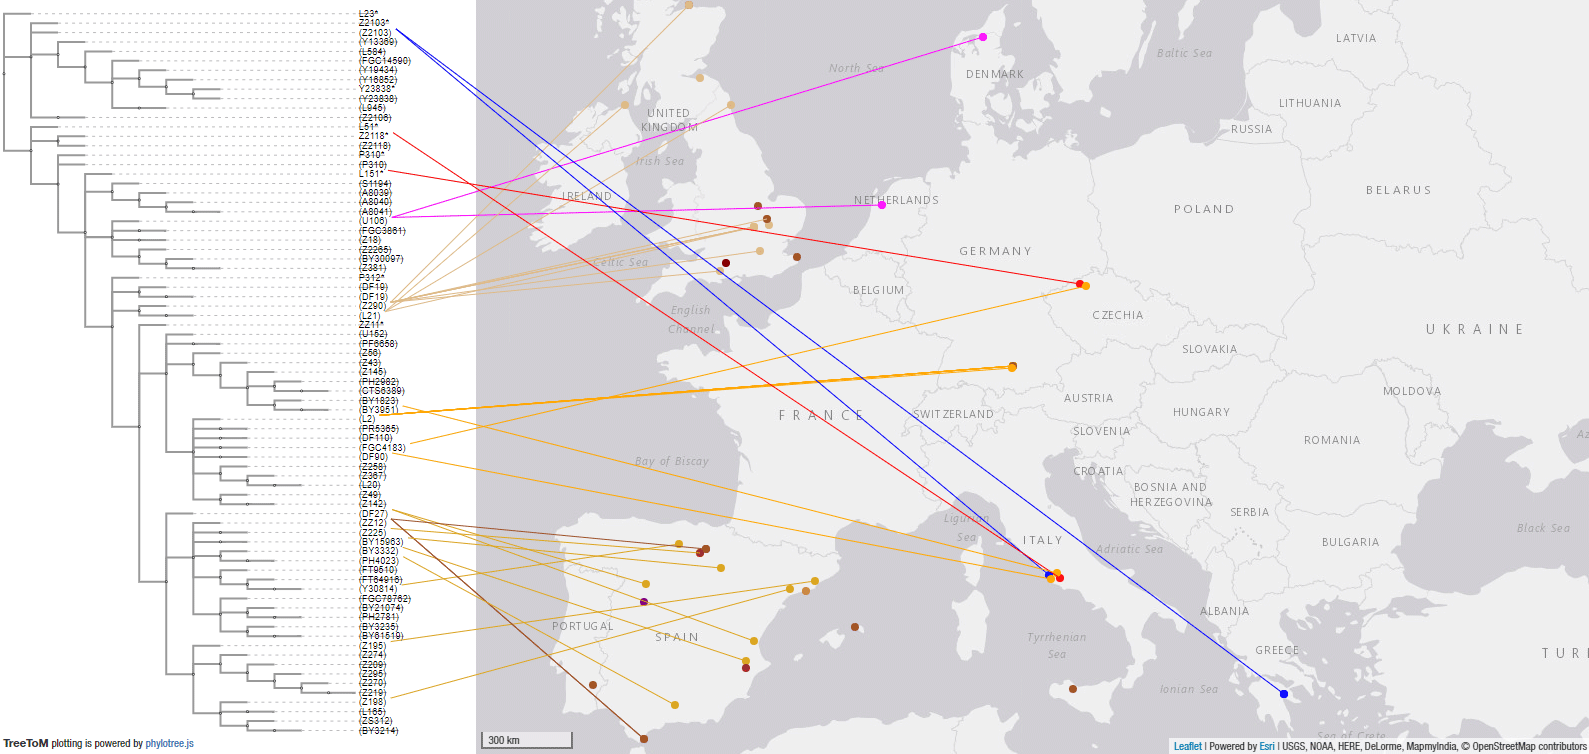 ancient-r1b-haplogroup-bronze-age-europe